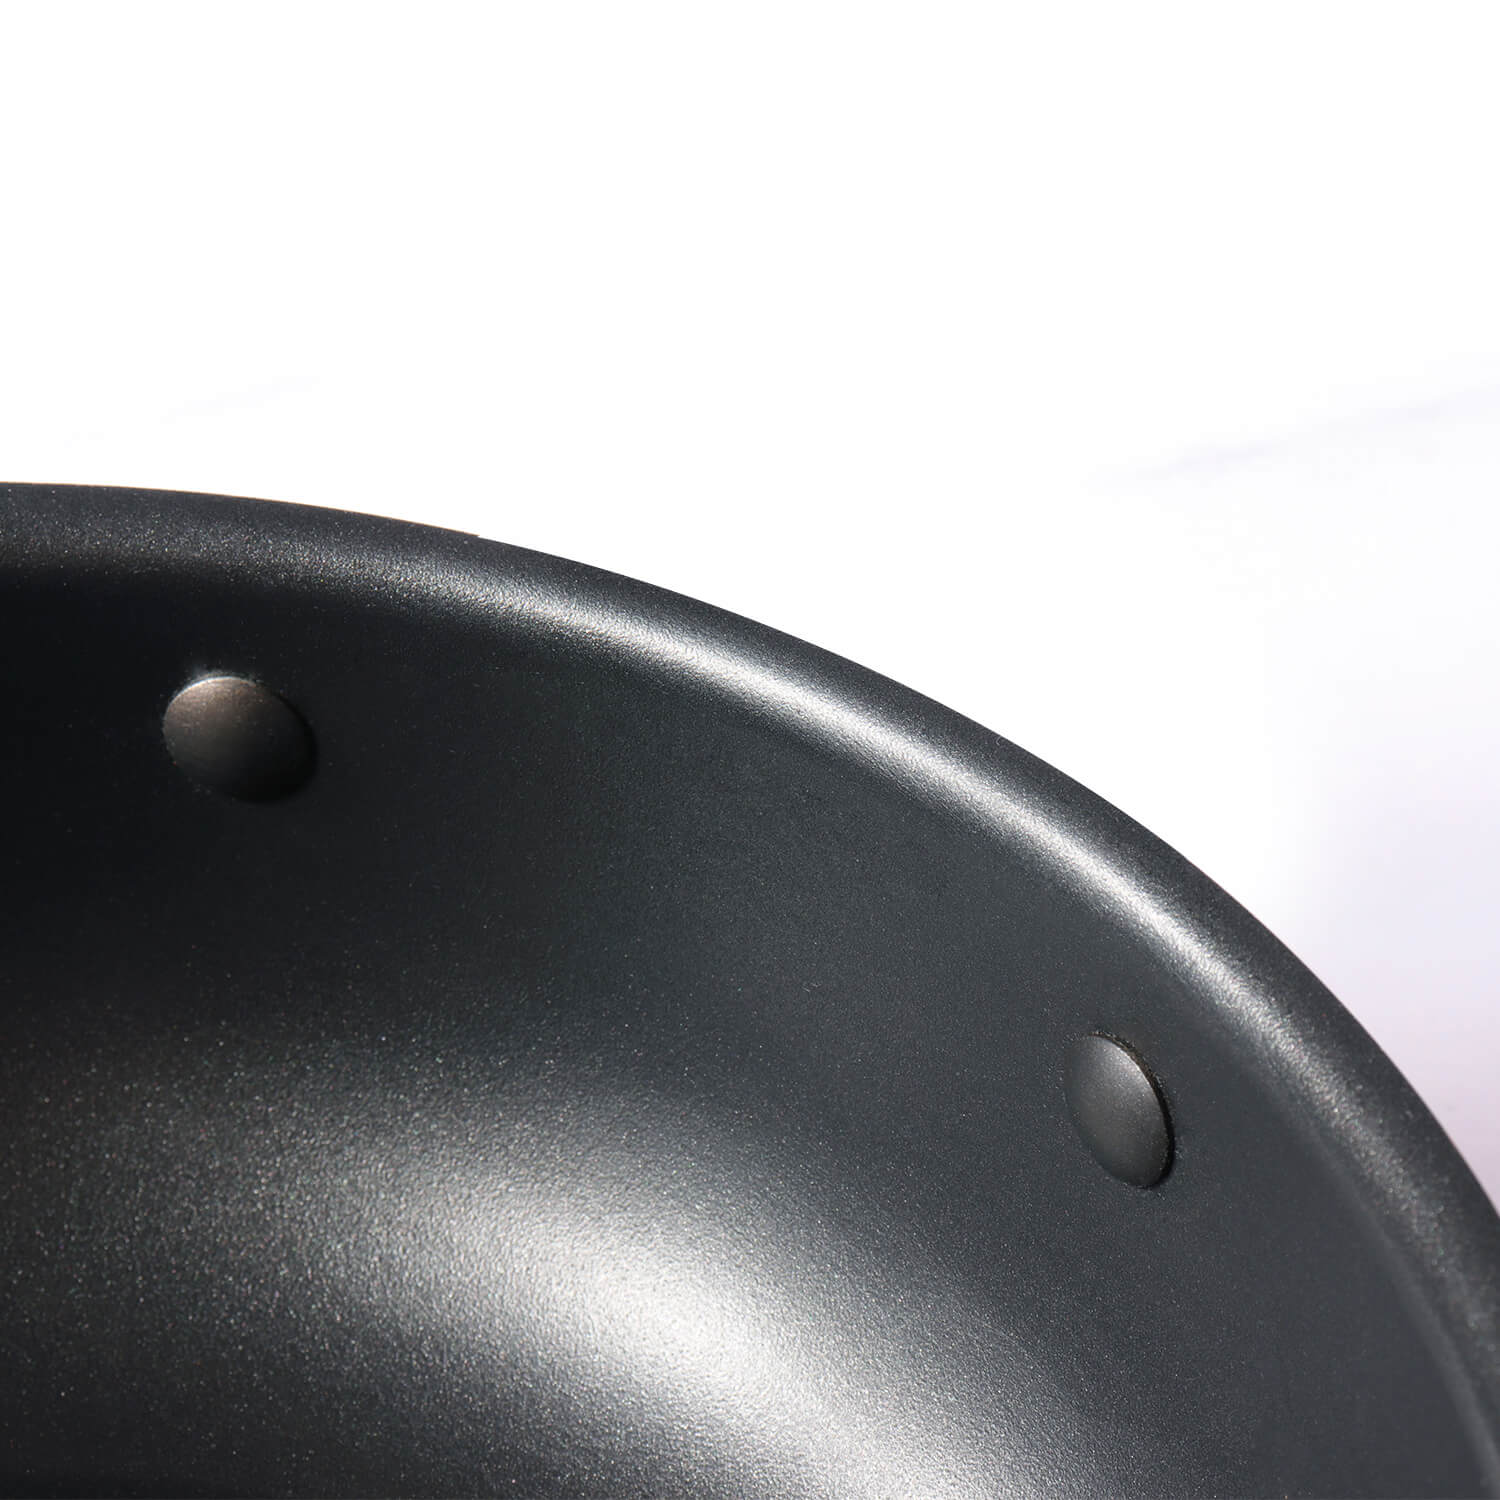 Meyer Accent Series Hard Anodized Nonstick Frying Pan/Skillet, 26cm, Matte Black